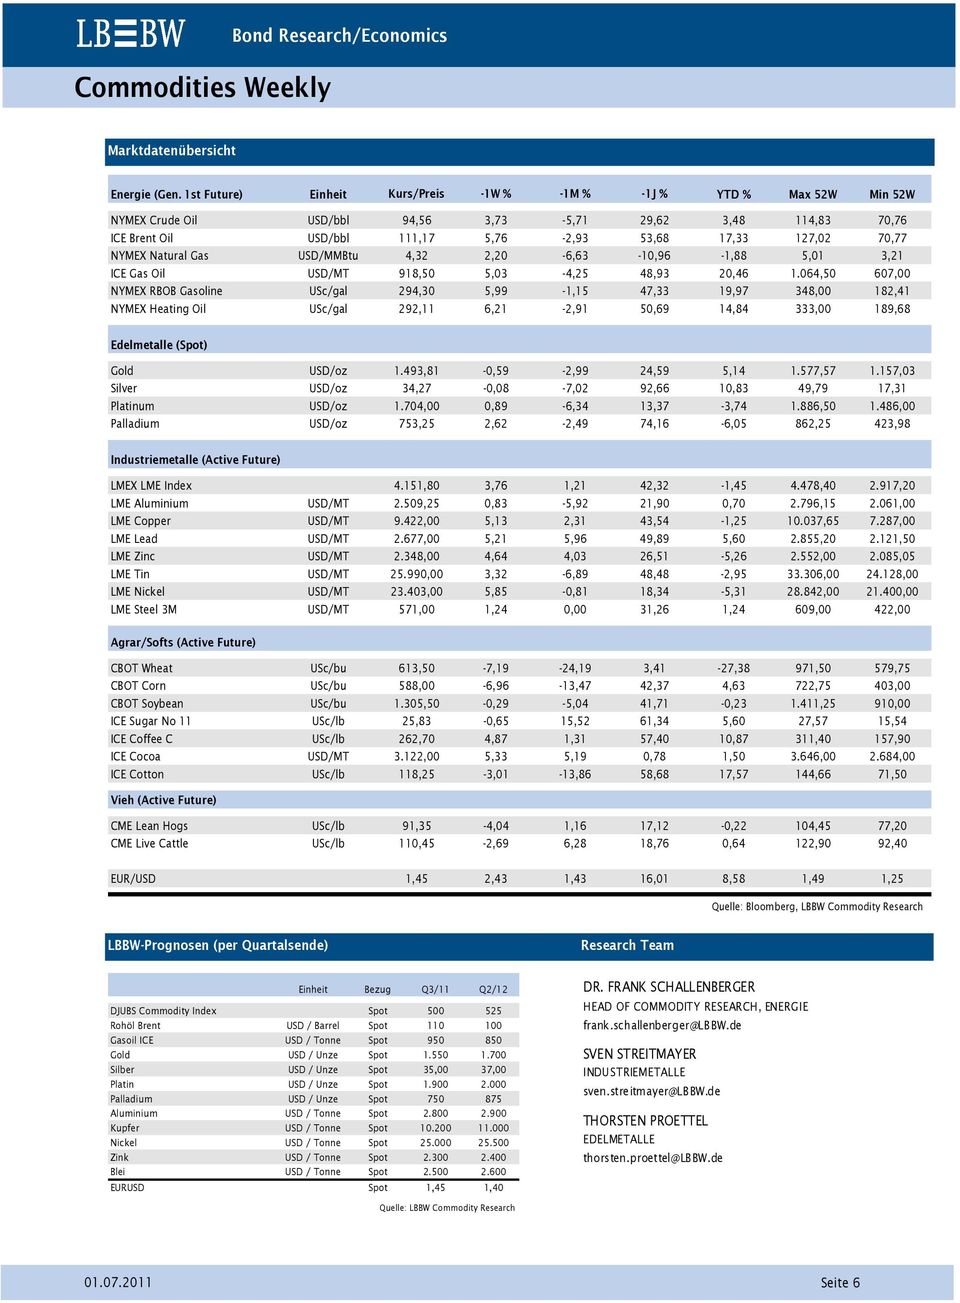 NYMEX Natural Gas USD/MMBtu 4,32 2,2-6,63-1,96-1,88 5,1 3,21 ICE Gas Oil USD/MT 918,5 5,3-4,25 48,93 2,46 1.